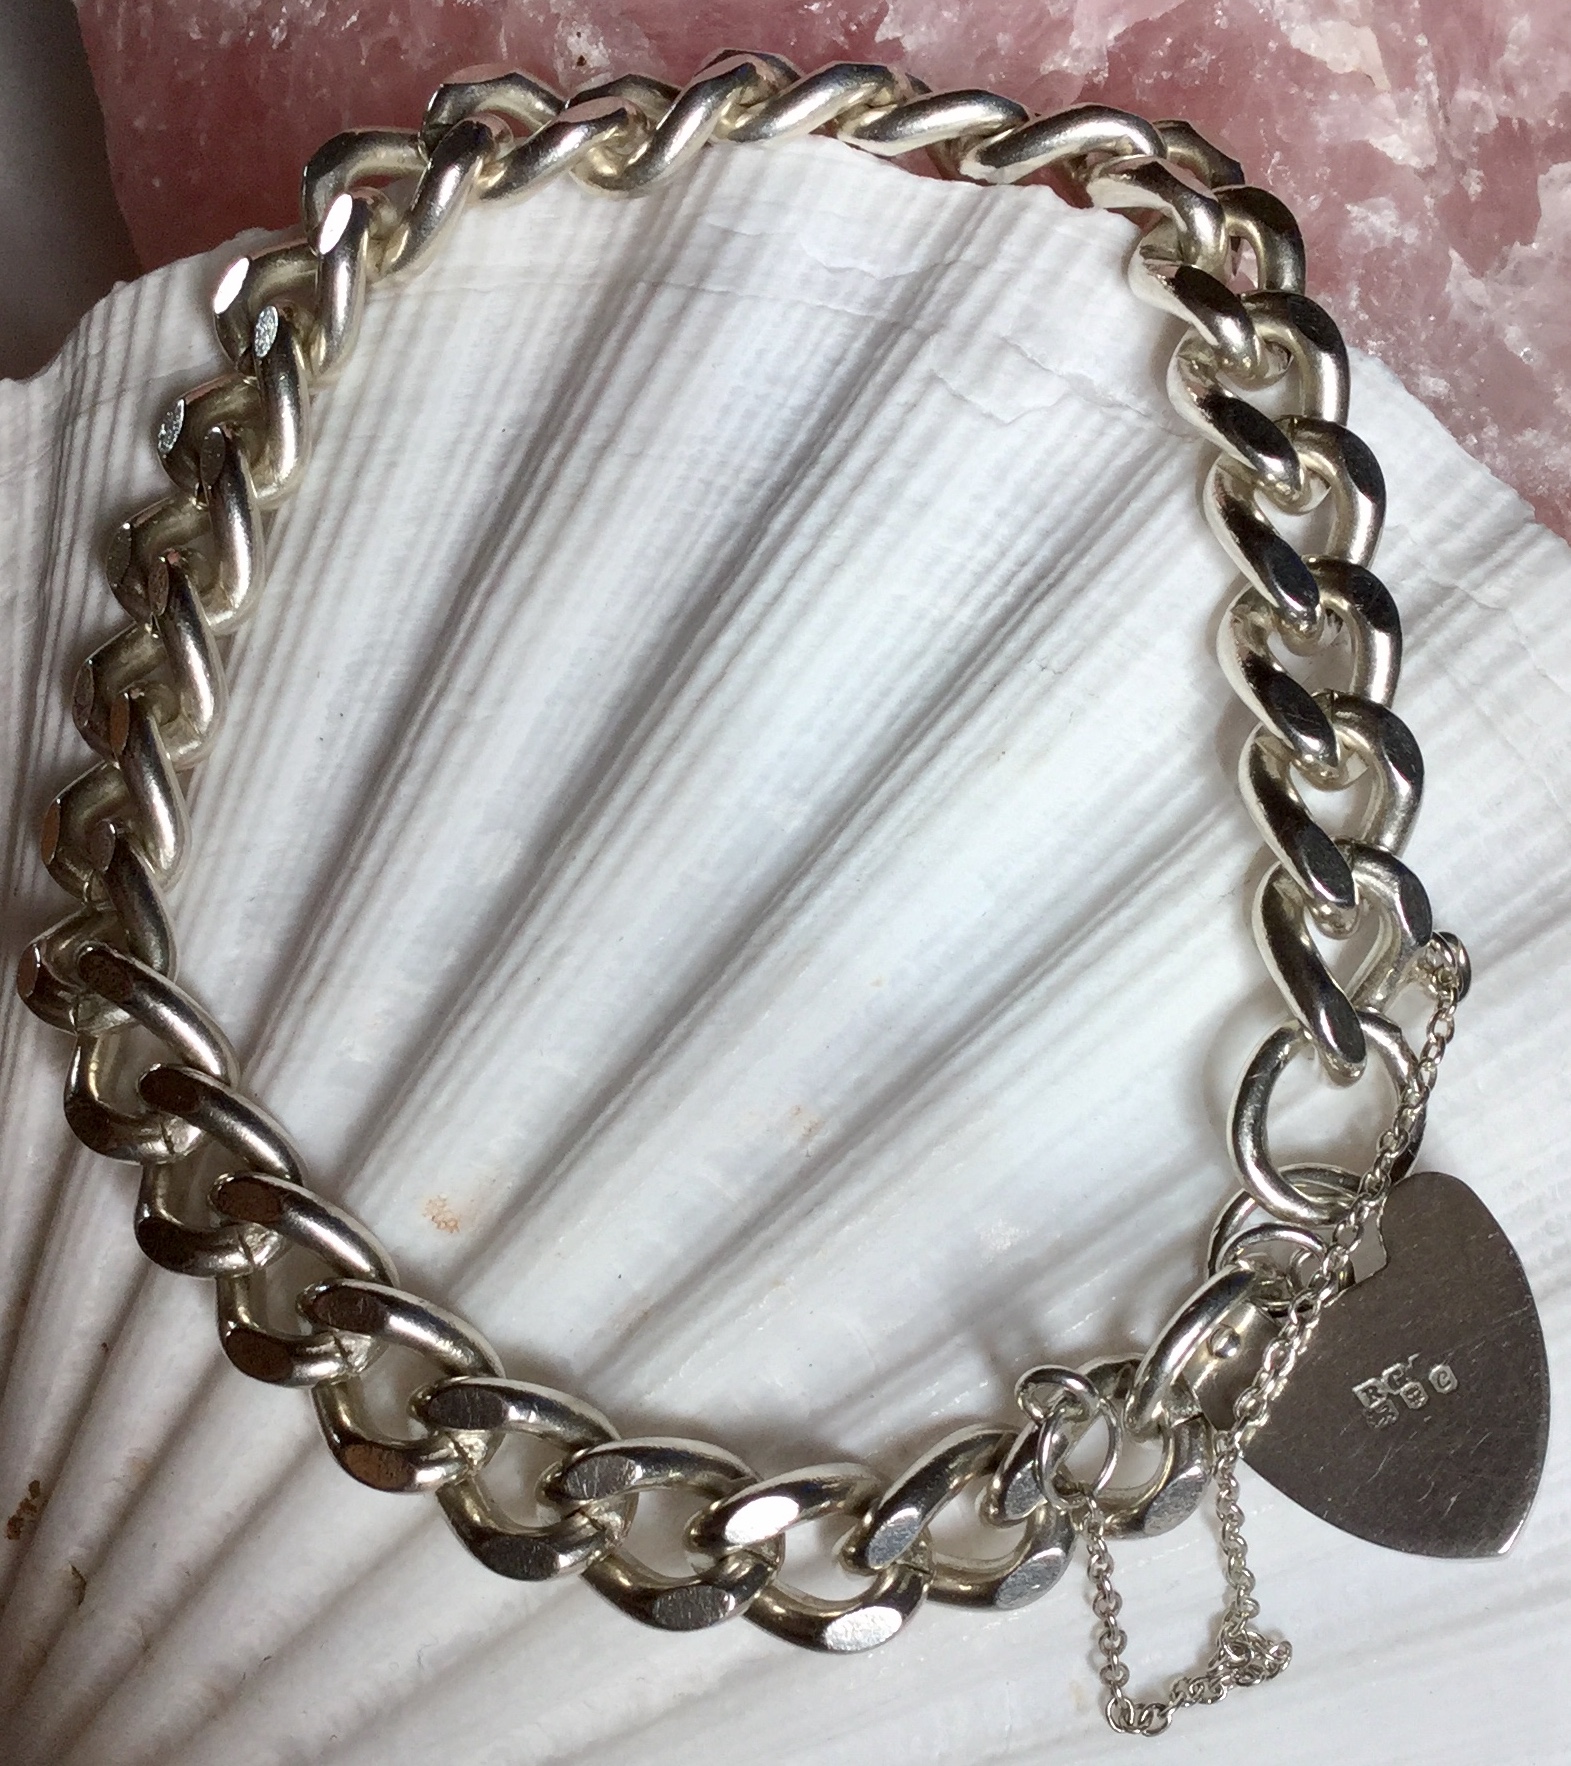 English Vintage 925 Silver Charm Bracelet Heart Clasp English Hallmarks 30.89 grams - Image 3 of 5